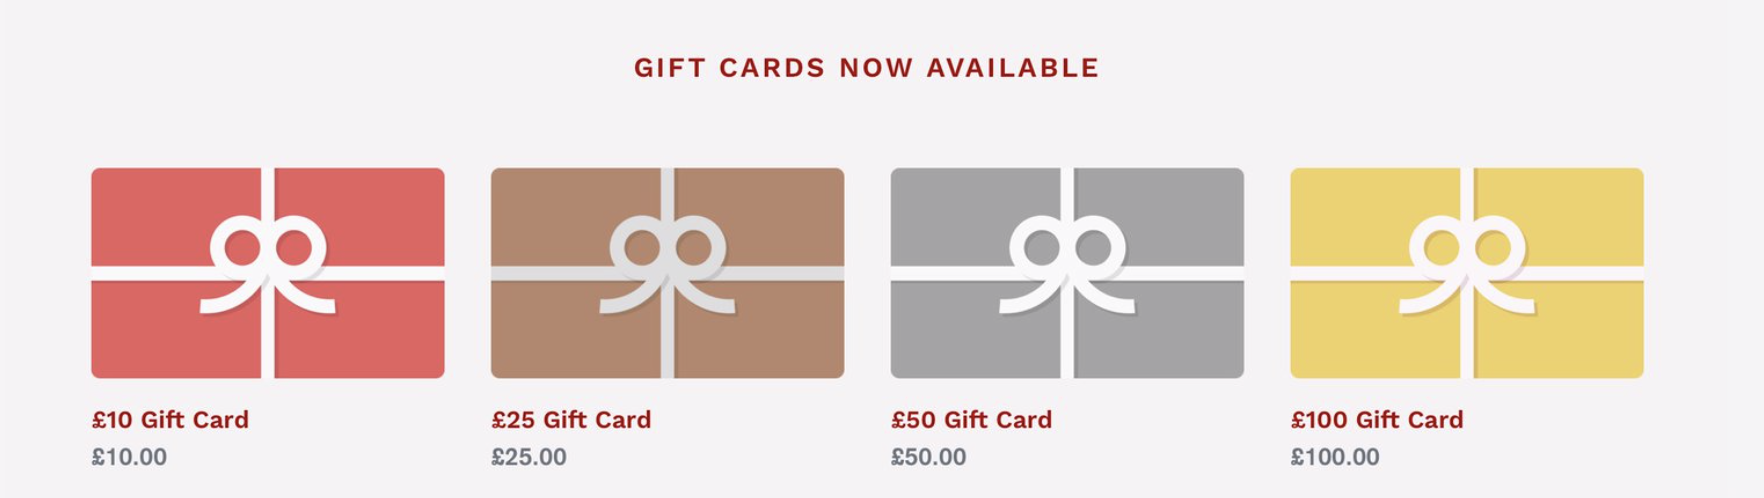 Gift Cards - Royal Hospital Chelsea